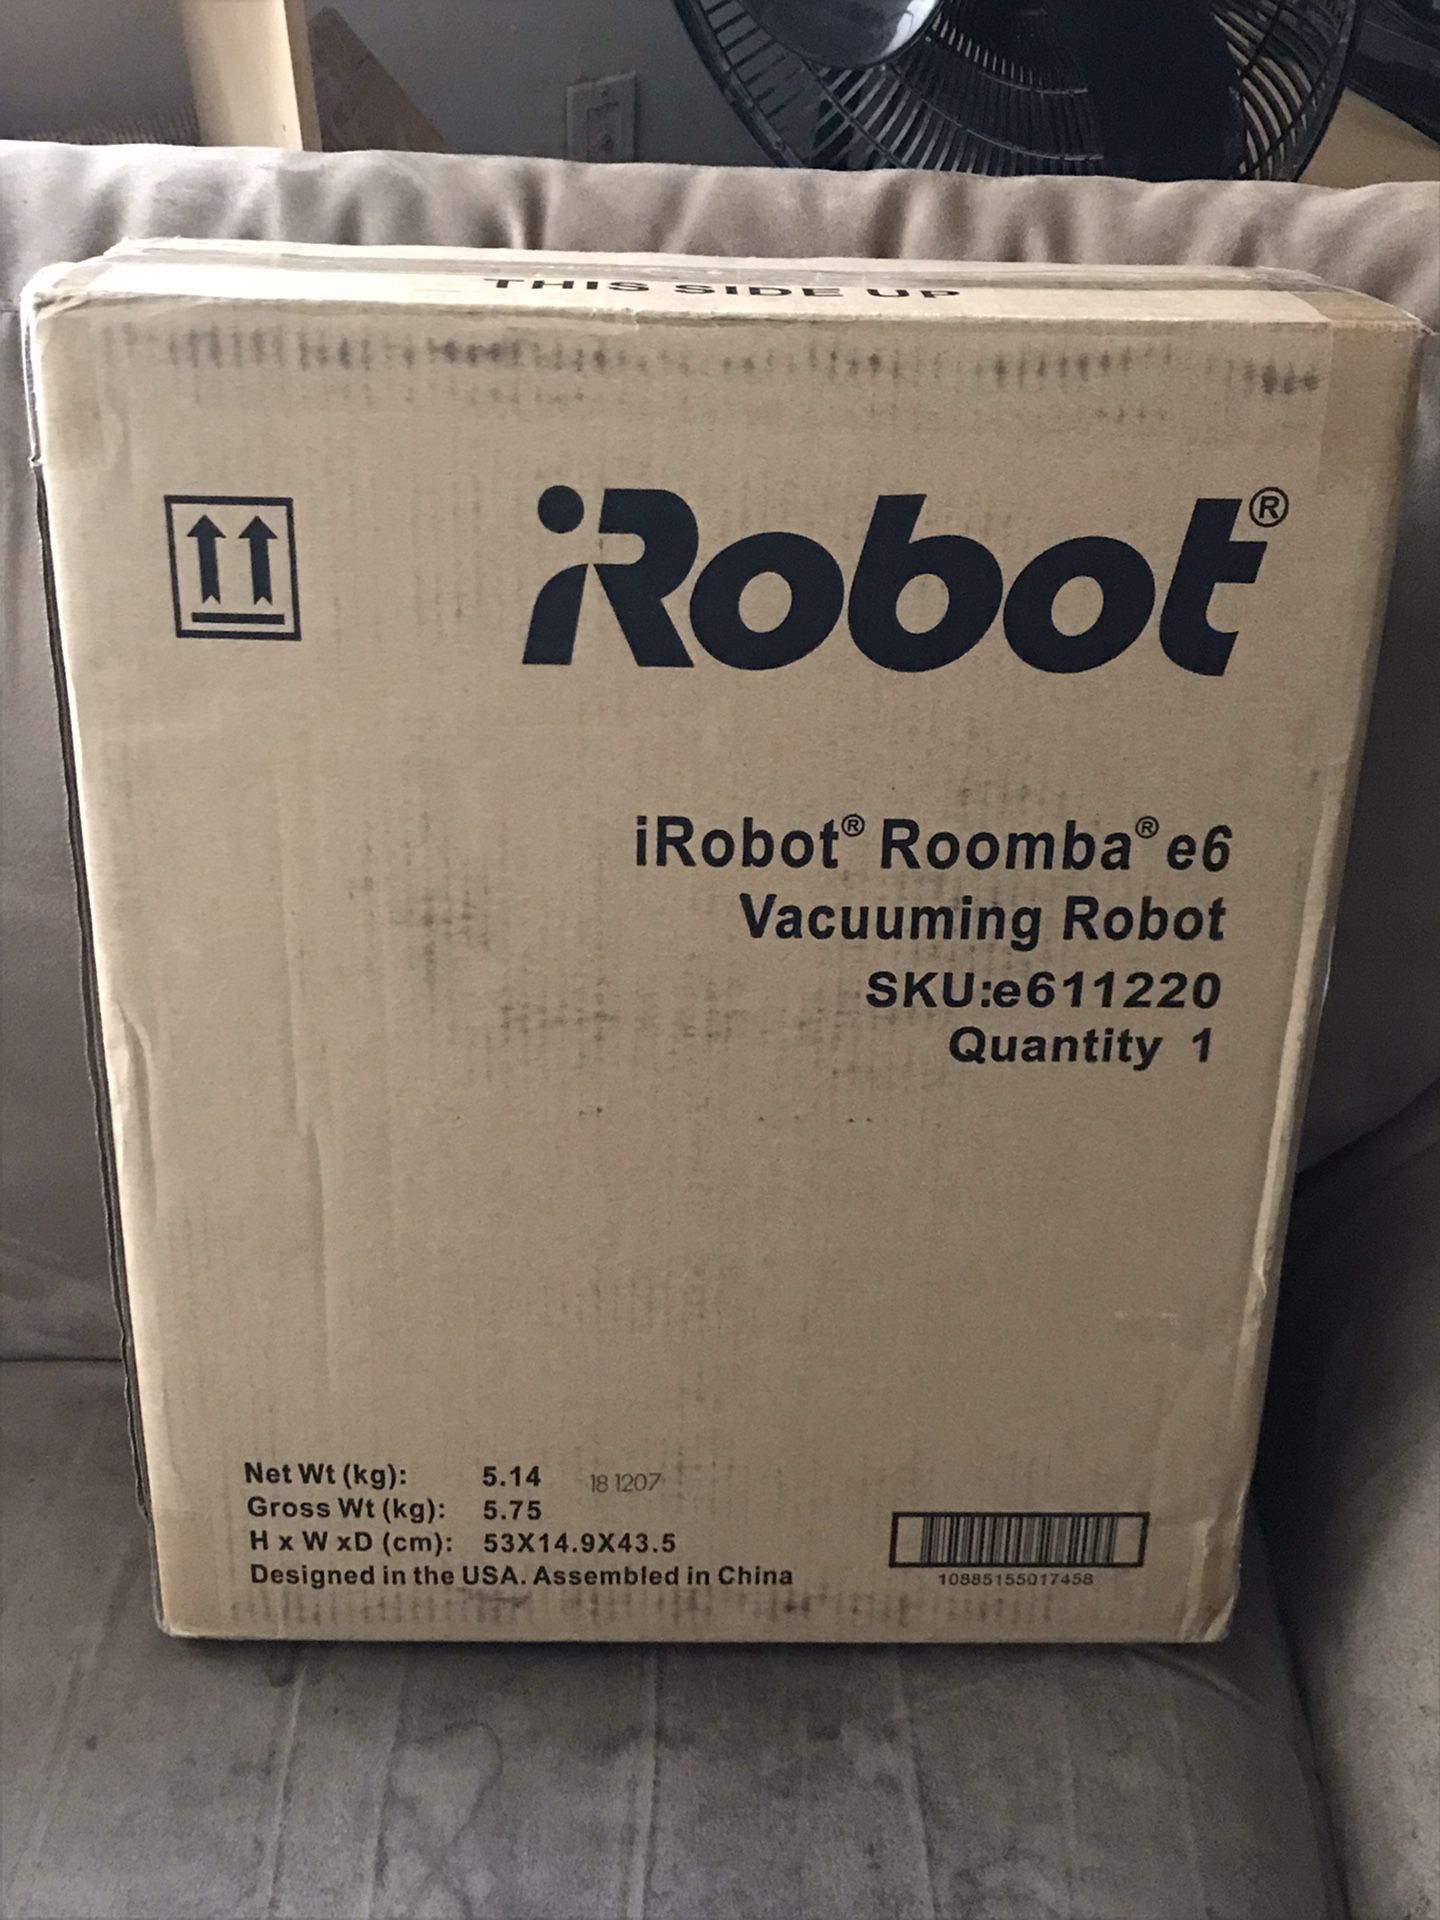 iRobot Roomba e6 robotic vacuum